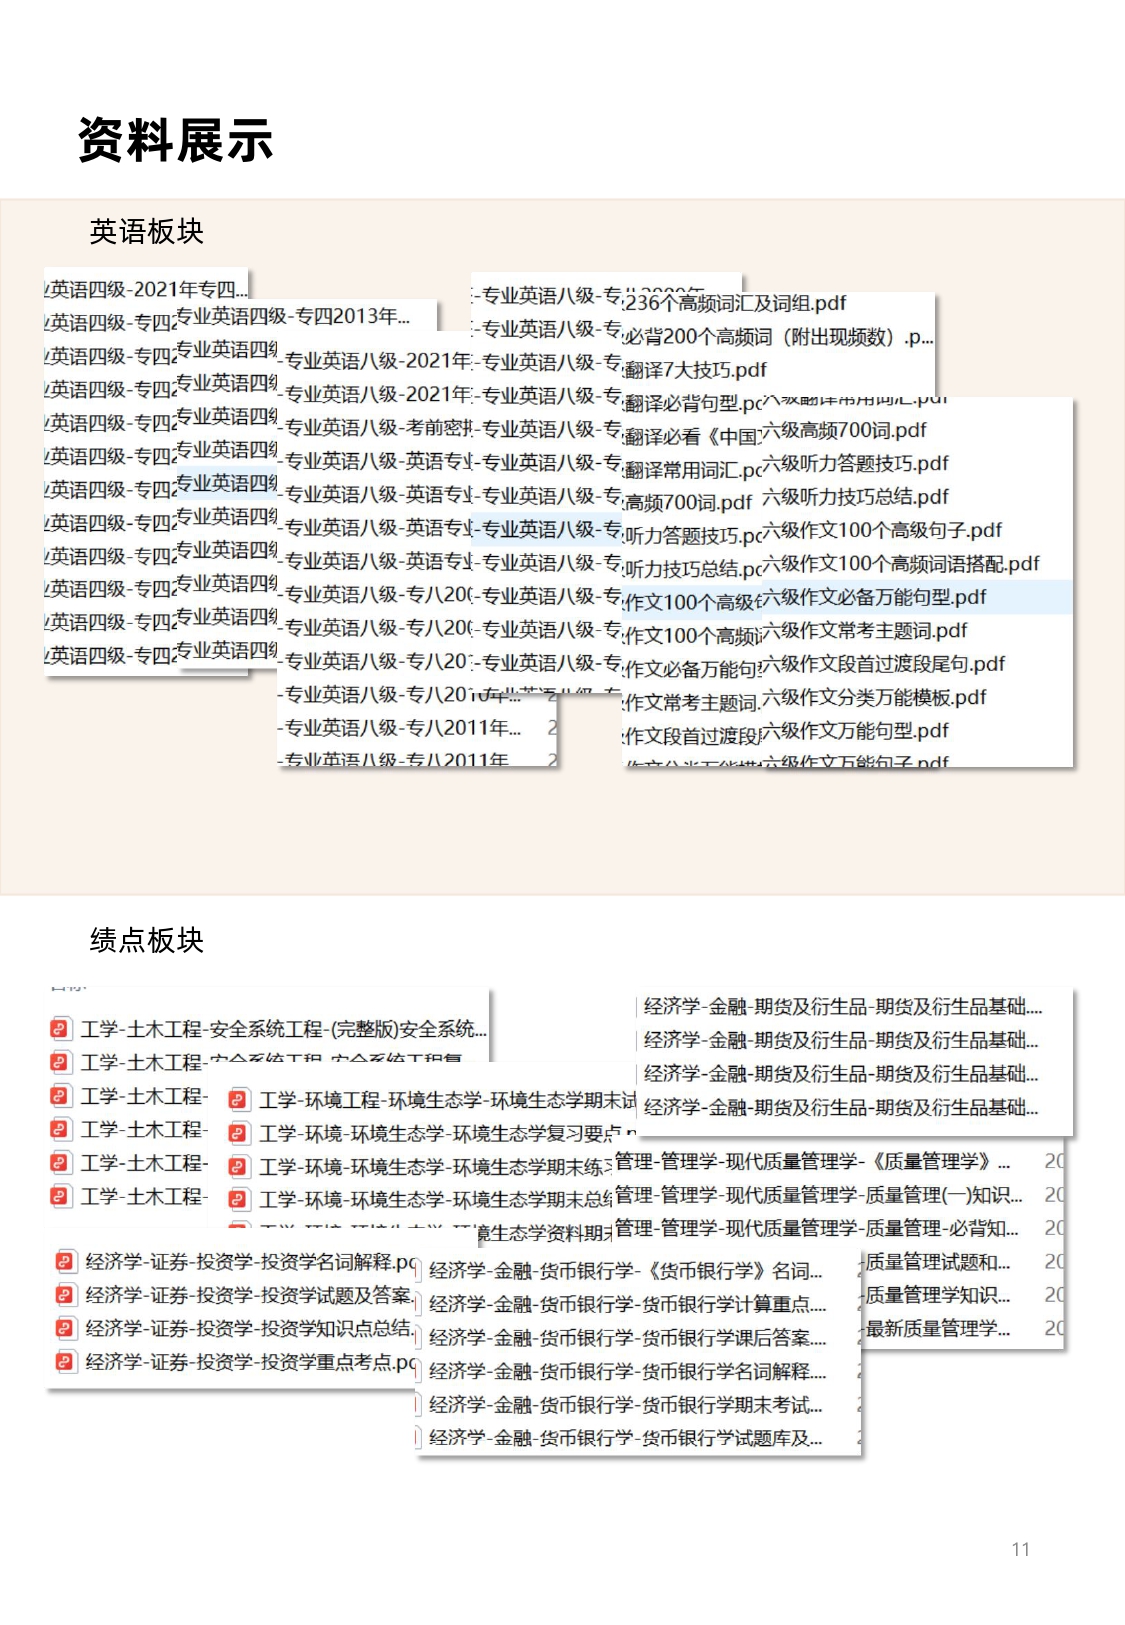 https://simg01.gaodunwangxiao.com/uploadfiles/product-center/202402/06/5b1a1_20240206133730.jpg